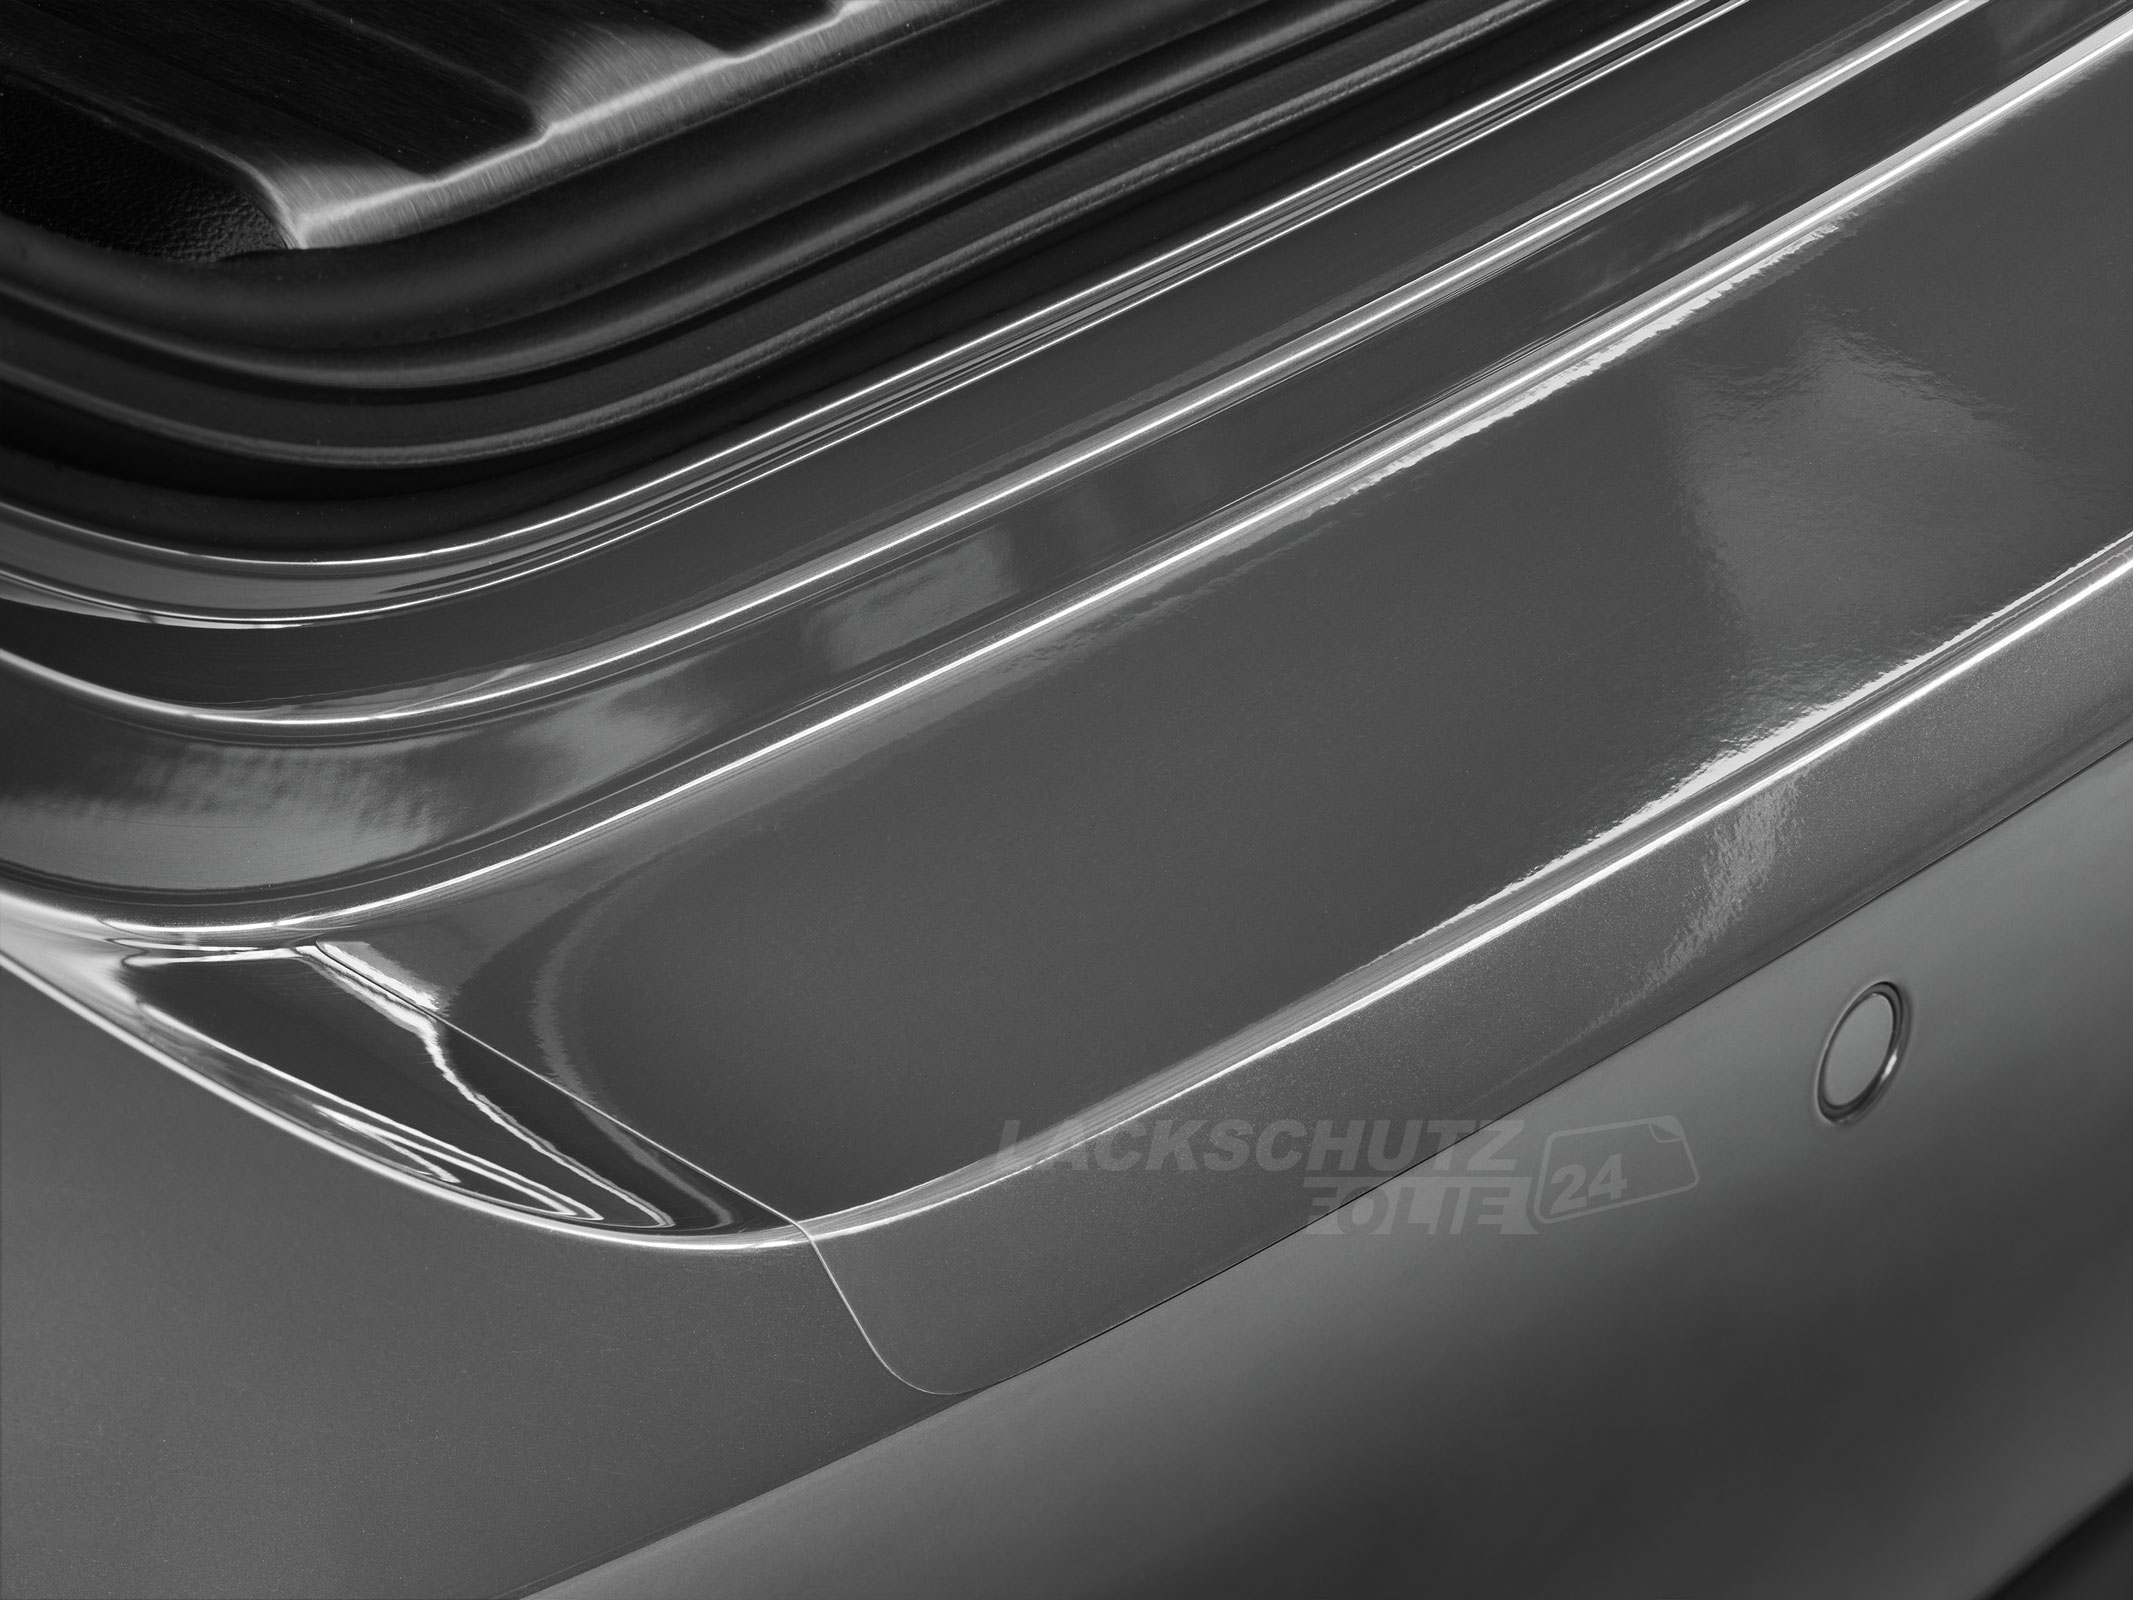 Ladekantenschutzfolie - Transparent Glatt Hochglänzend 240 µm stark für Kia Optima Limousine Typ TF, BJ 2010-2015